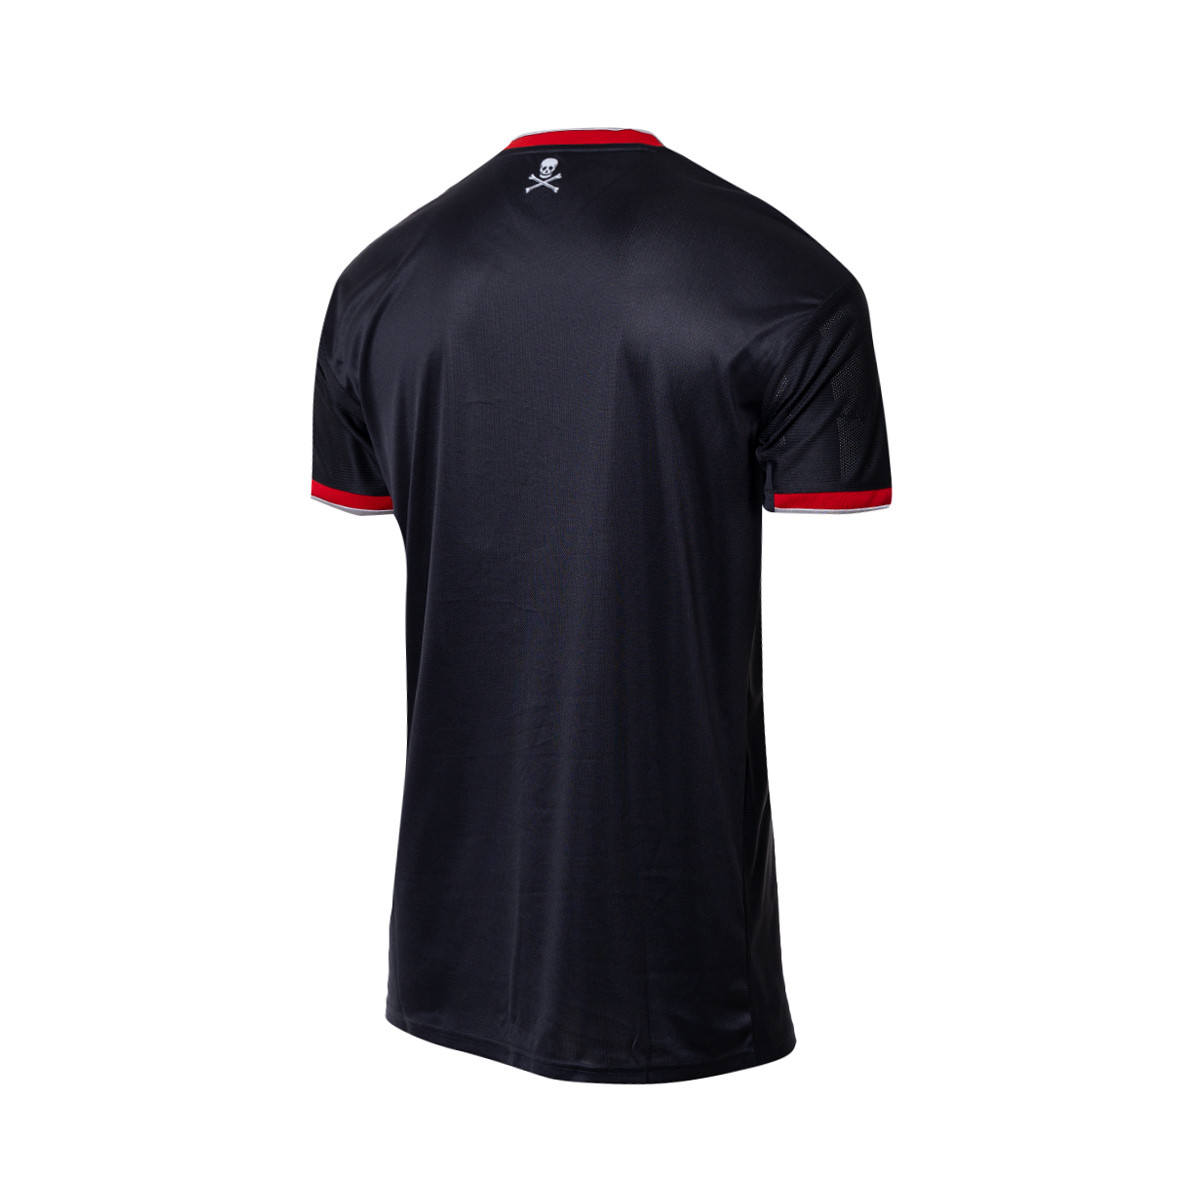 Orlando Pirates 2022-23 Adidas Home Kit - Football Shirt Culture - Latest  Football Kit News and More